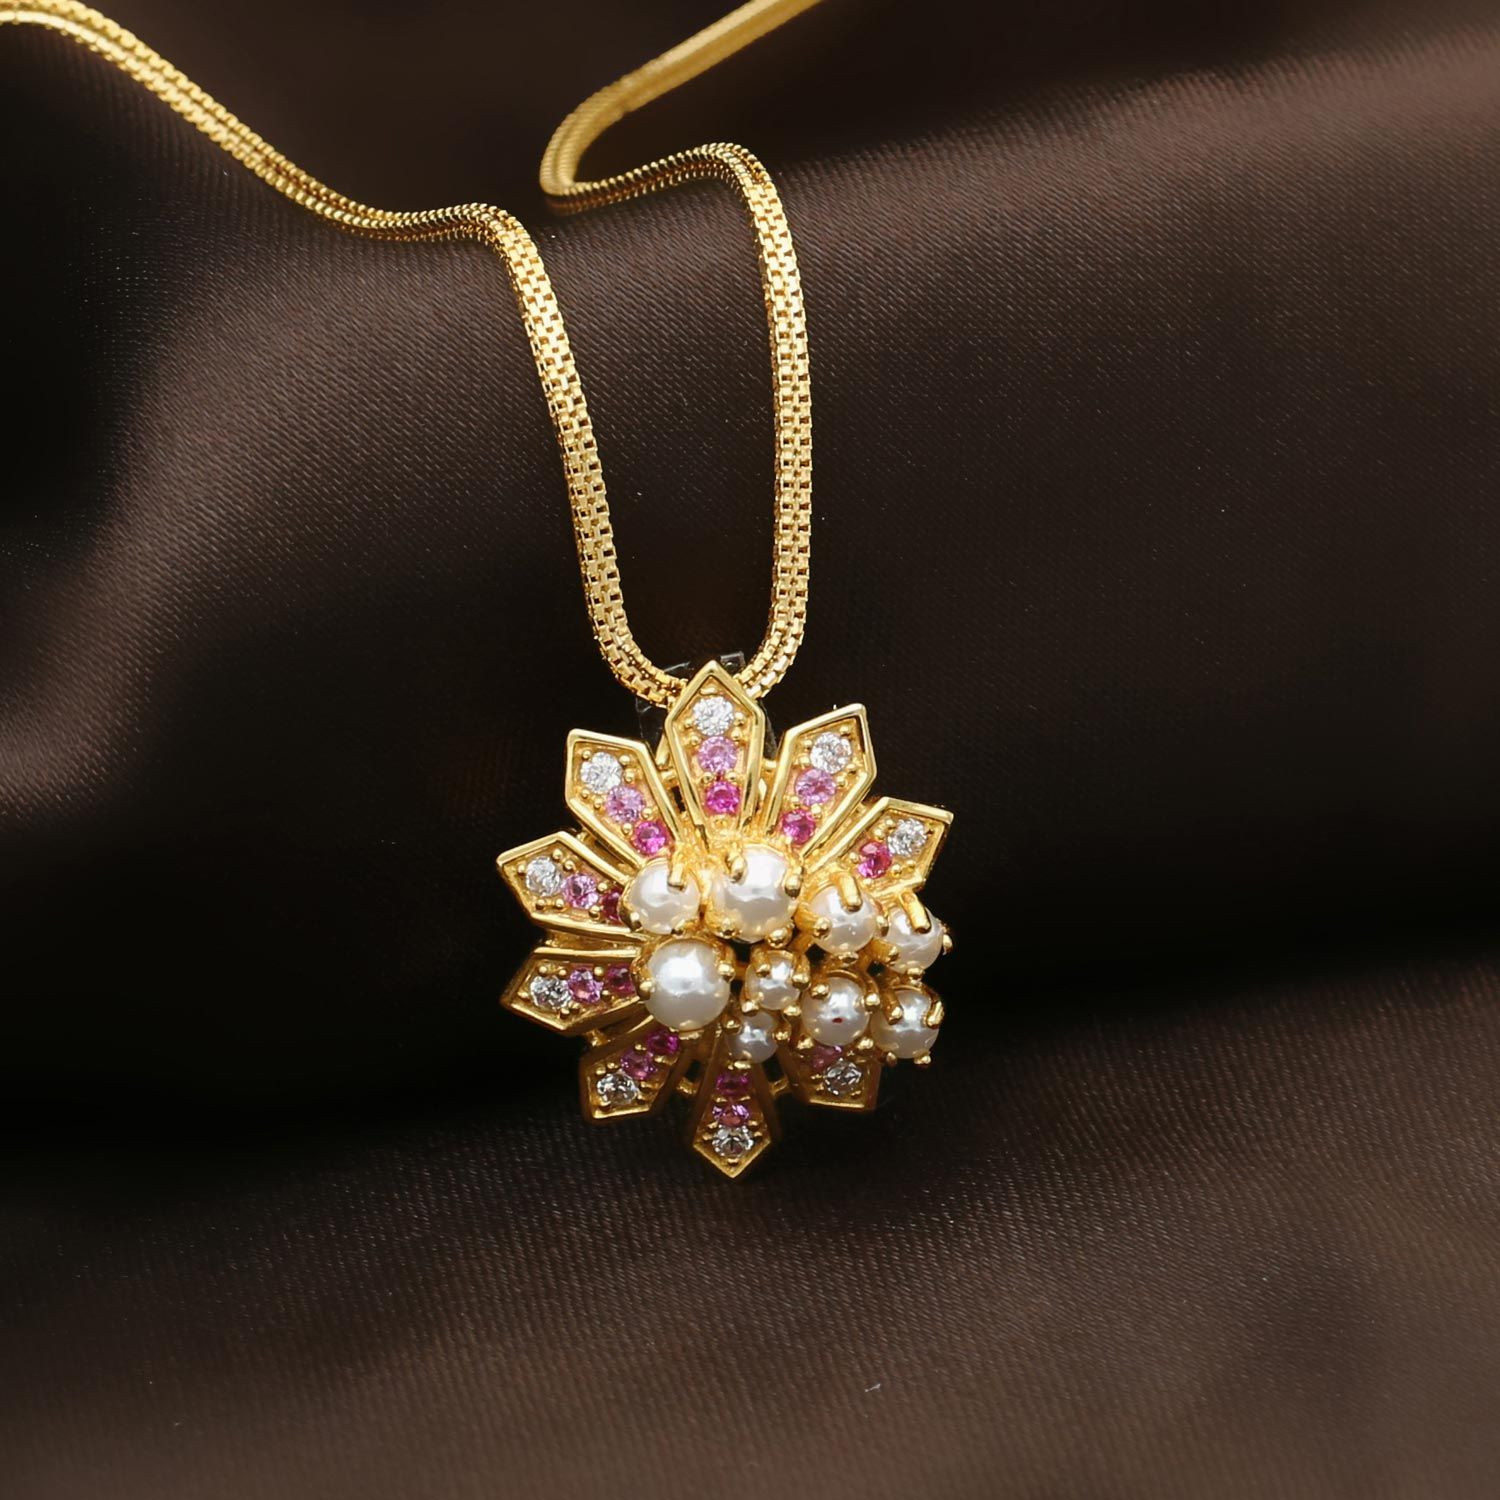 Buy Malabar Gold and Diamonds BIS Hallmark (916) 22K Yellow Gold Chain for  Women at Amazon.in